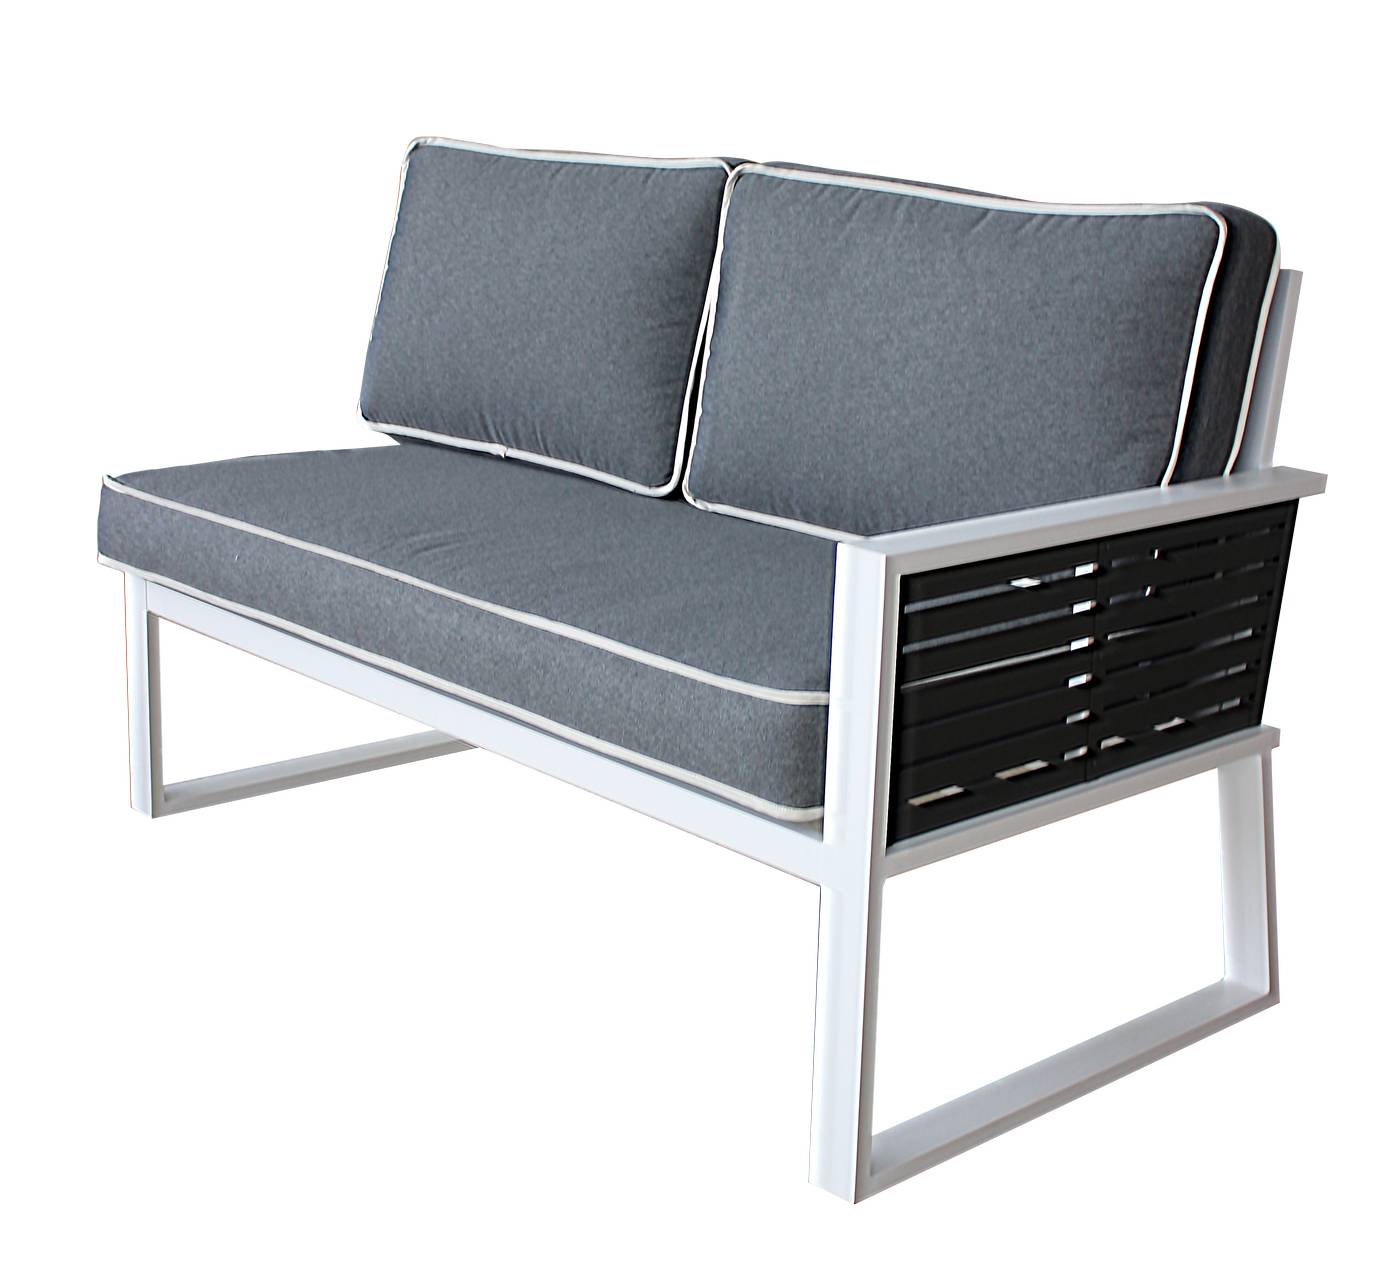 Set Rinconera Aluminio Luxe Yebel-10 - Exclusiva rinconera luxe 6 plazas + mesa de centro alta. Estructura de aluminio bicolor.